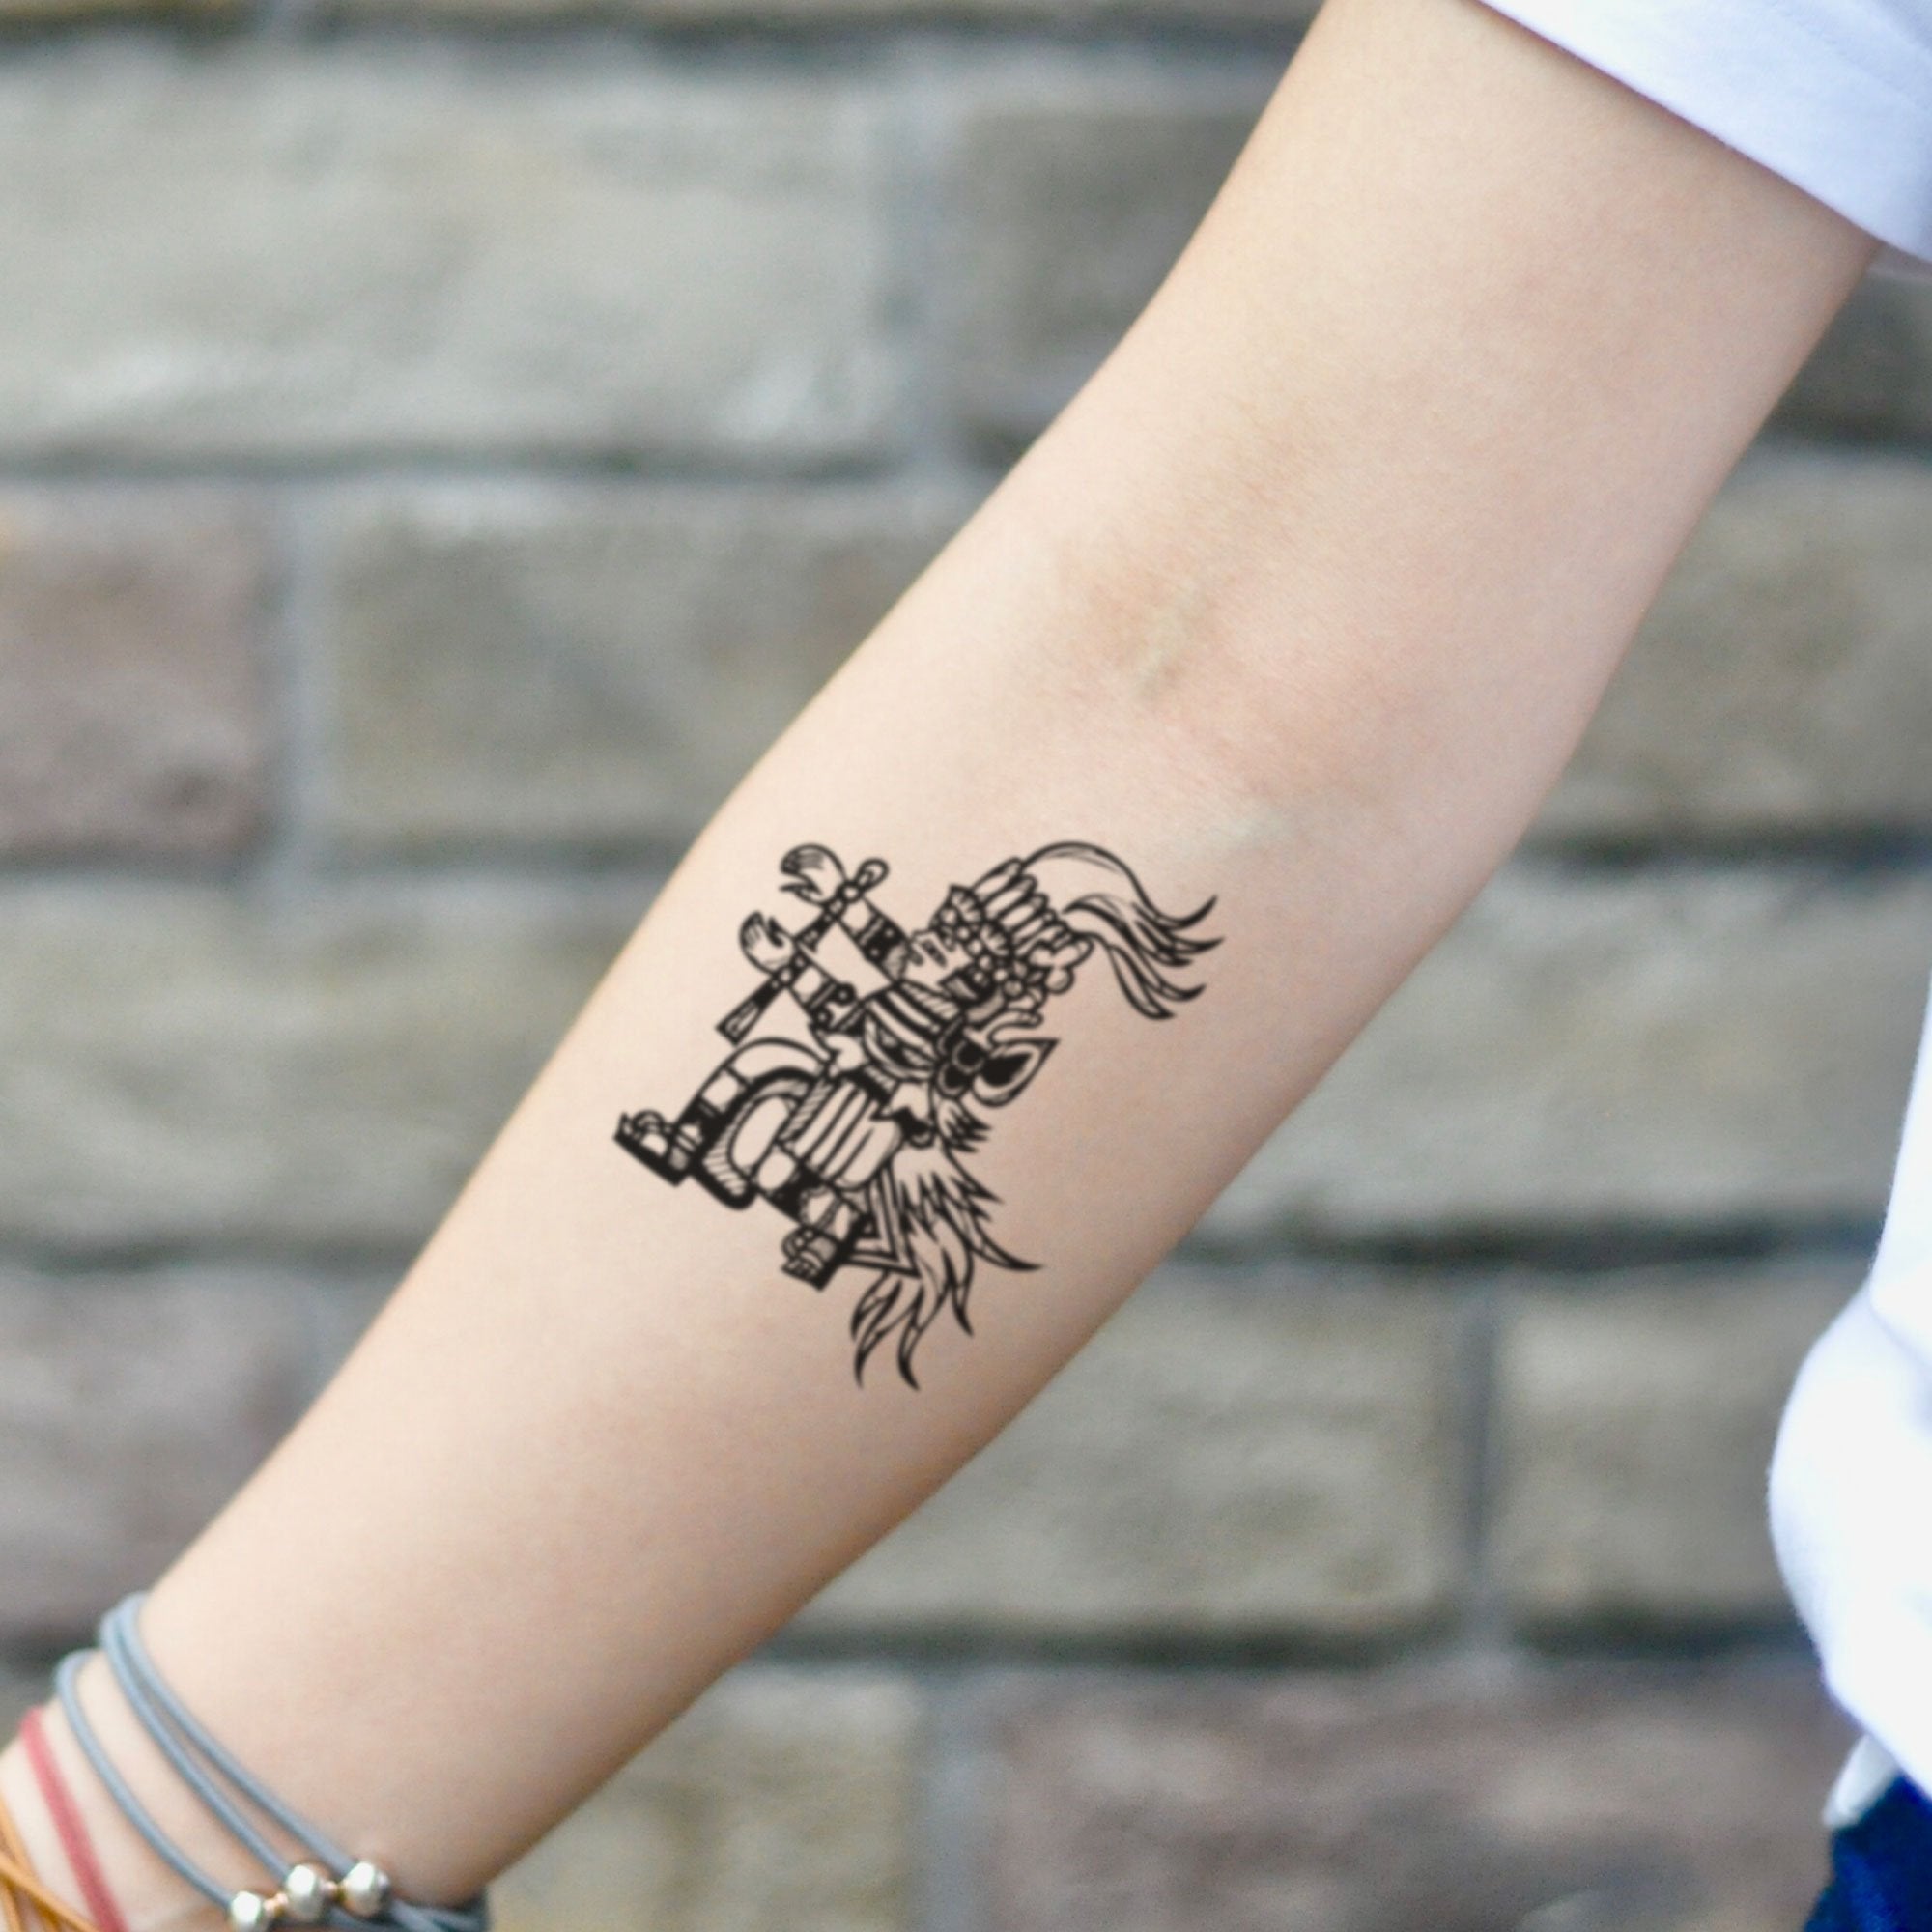 Aztec Tattoos | GET a custom Tattoo design 100% ONLINE